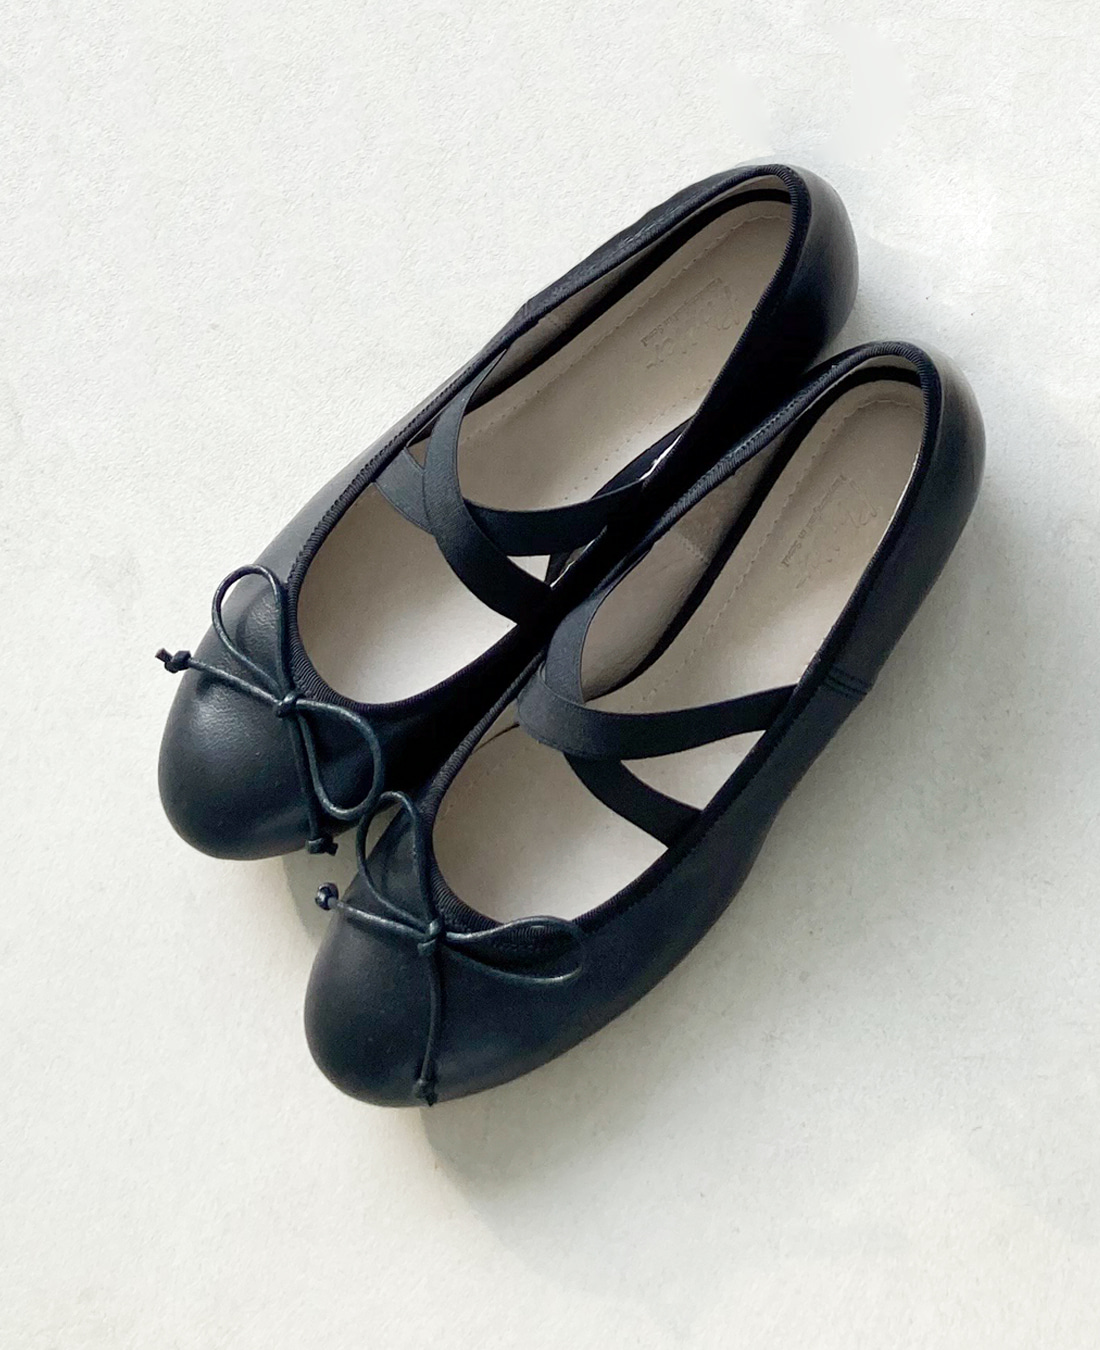 X-Strap Ballerina Flat Shoes (Black)